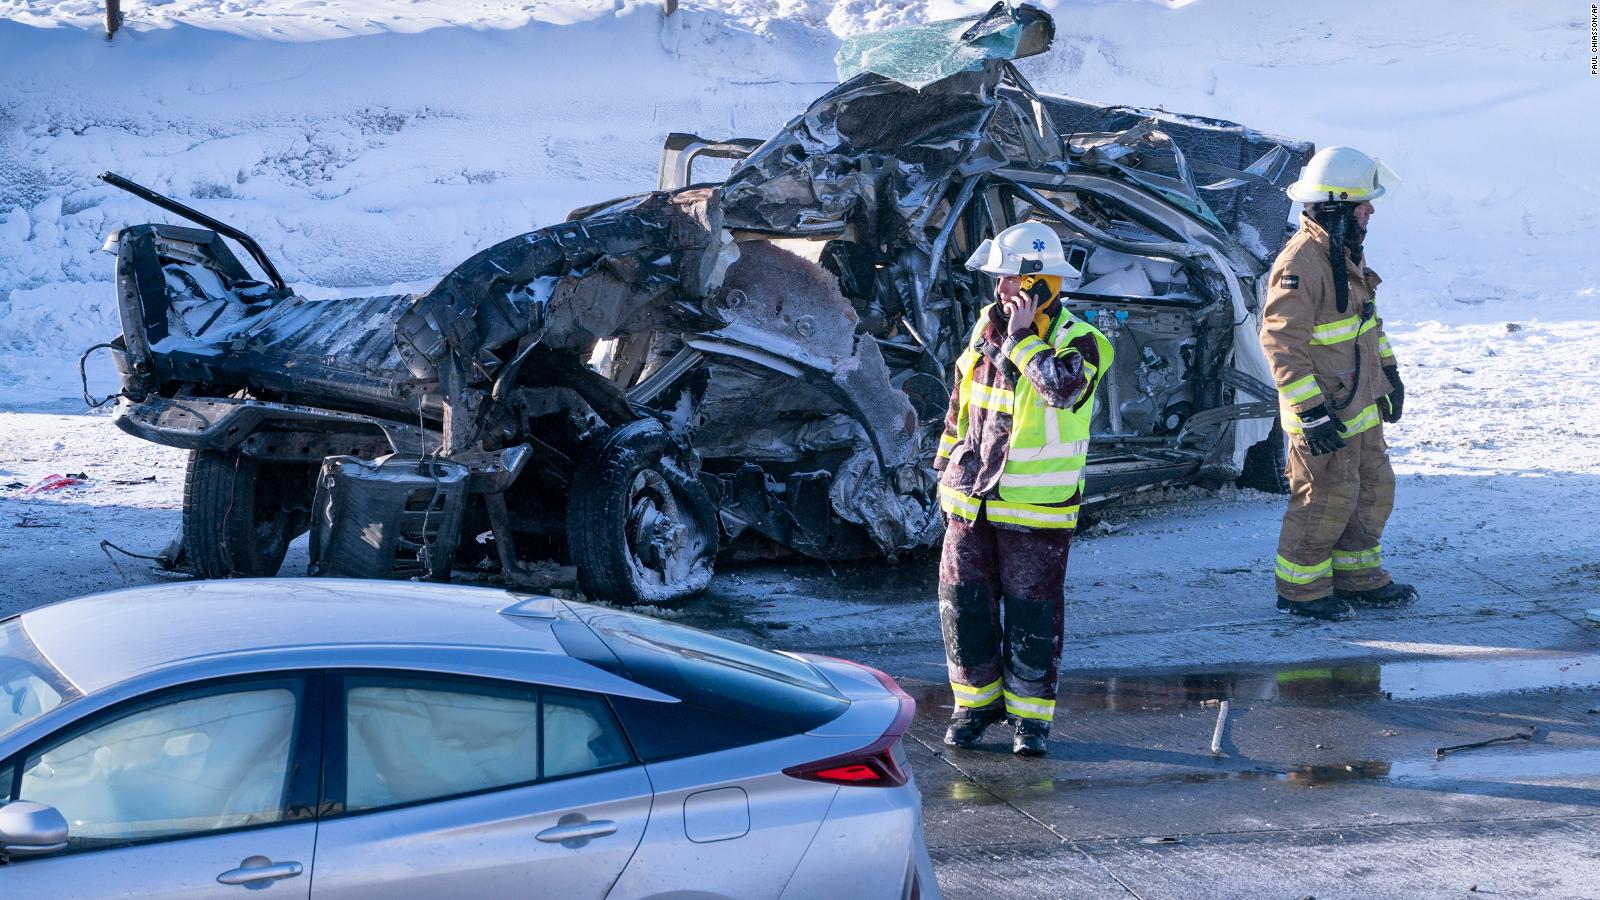 Canada car accident 2 killed in massive pileup involving more than 200